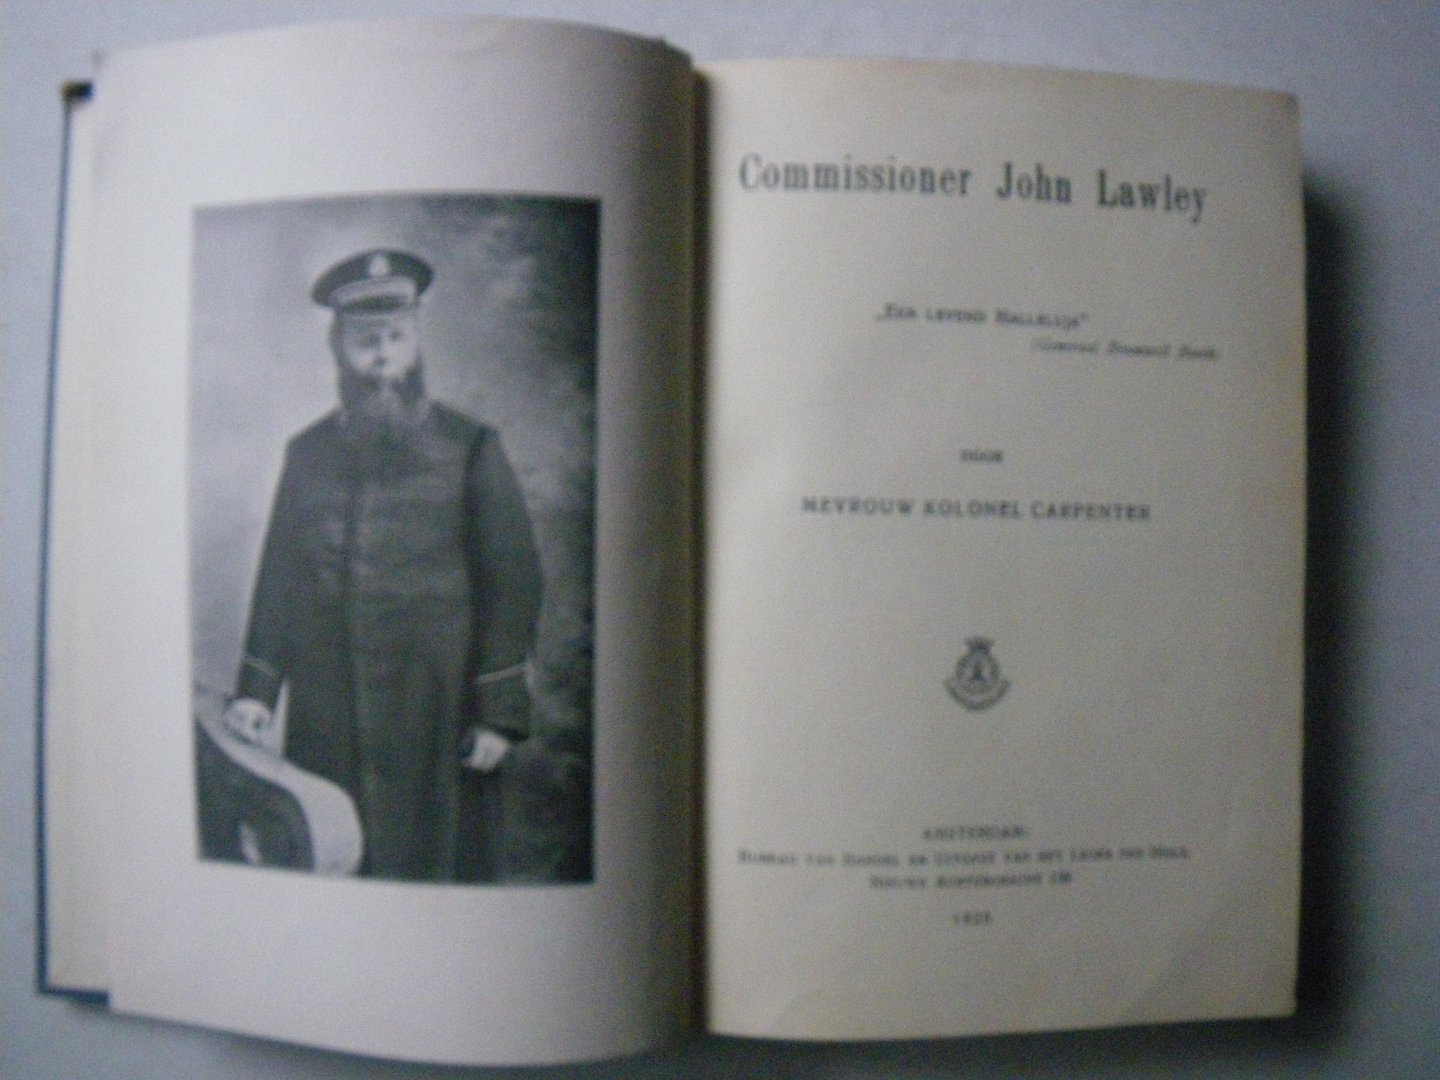 Carpenter, mevr. Kolonel , "Een levend Halleluja" (Generaal Bramwell Booth) - Commissioner John Lawley